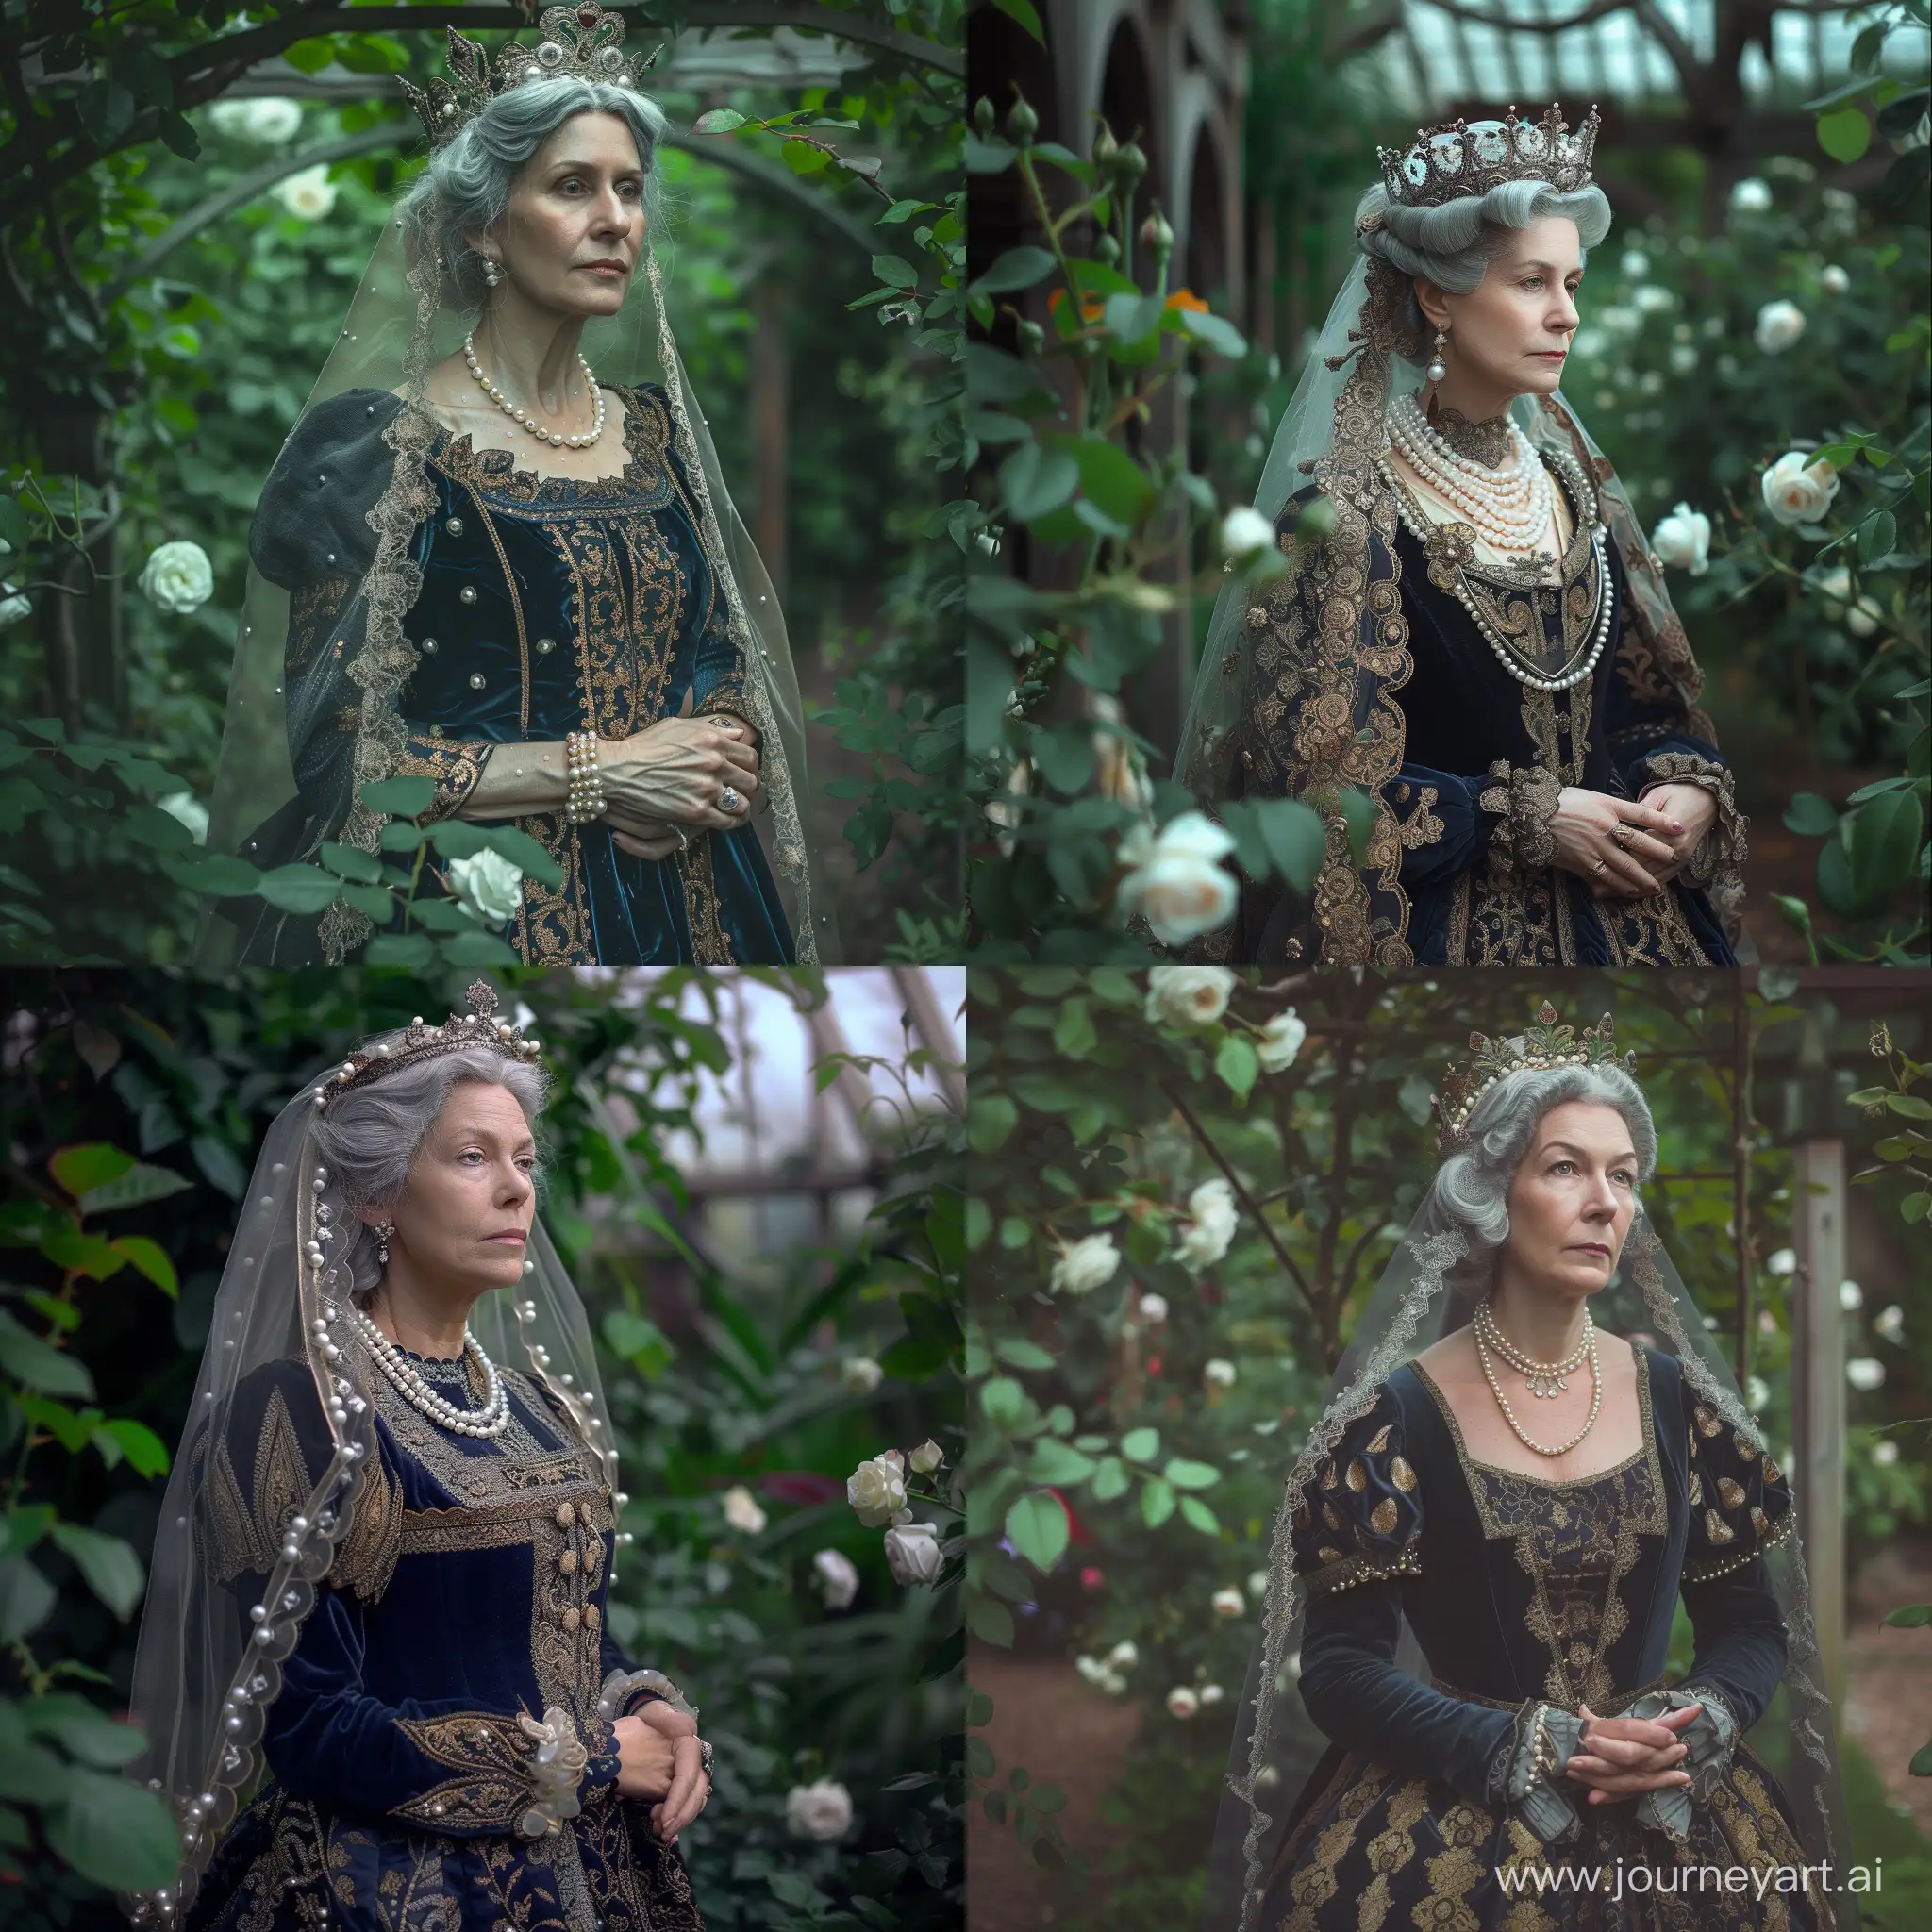 Elegant-Renaissance-Noblewoman-Contemplates-in-Lush-Garden